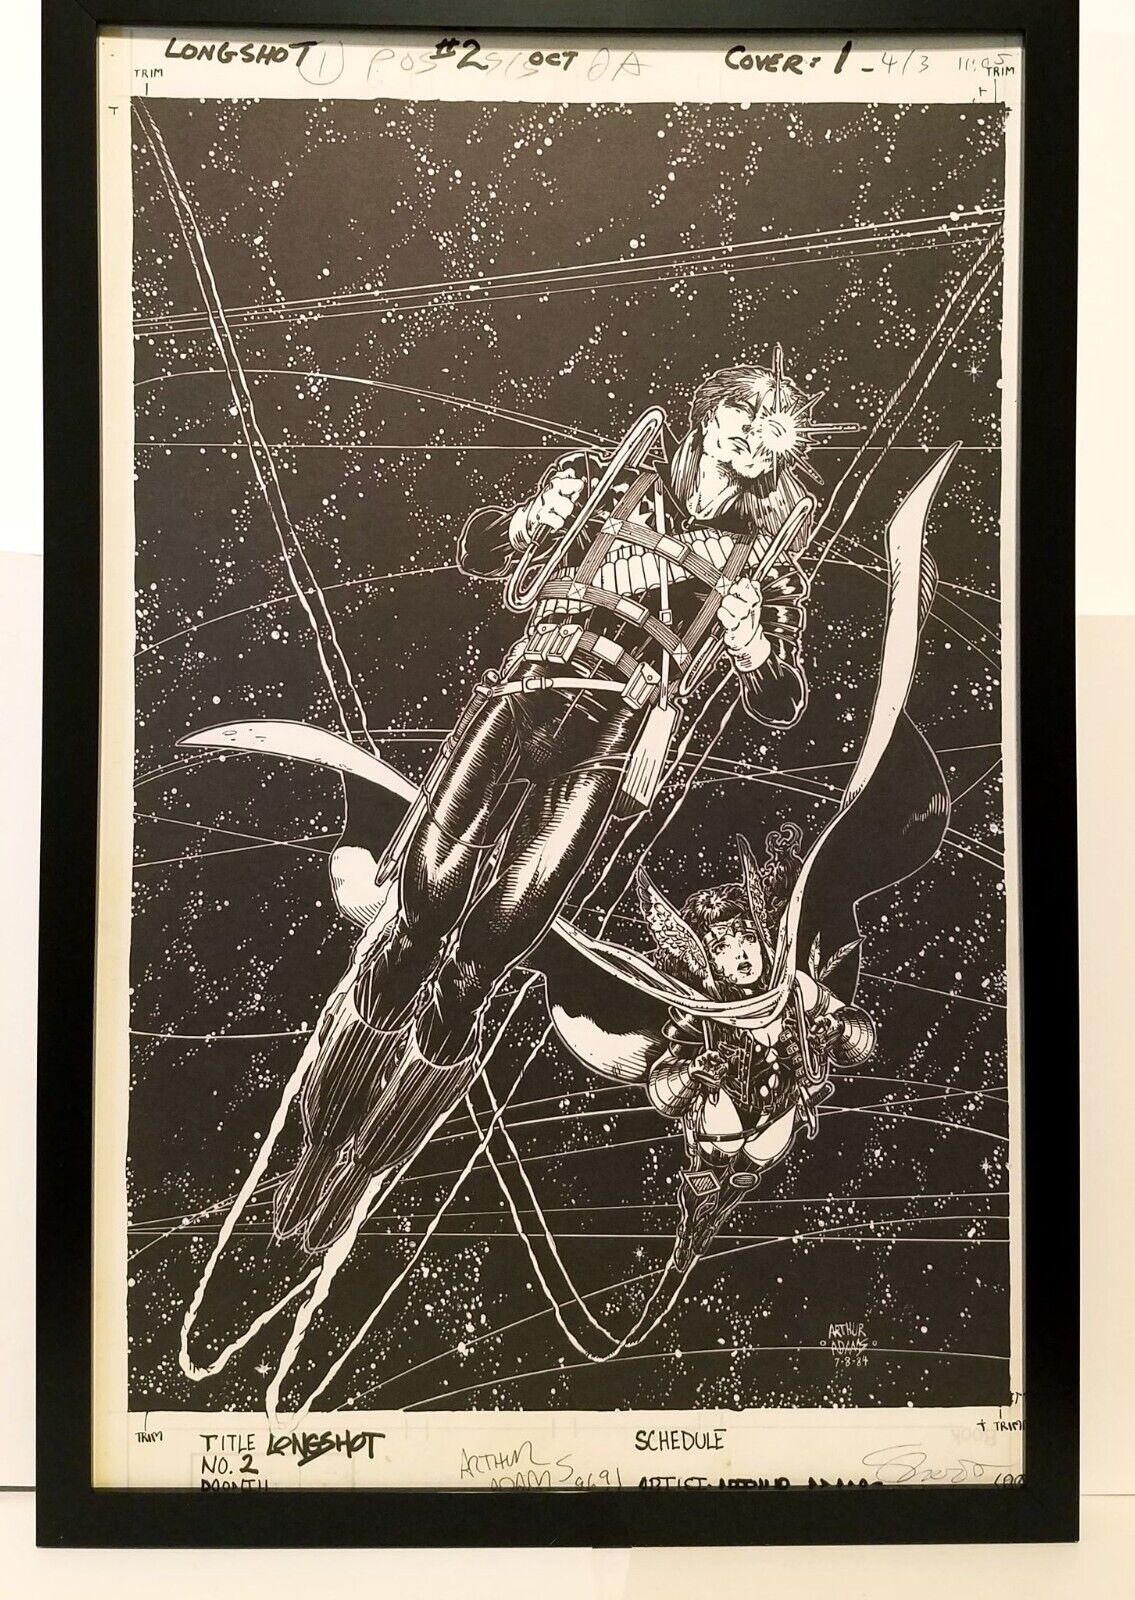 Longshot #2 by Art Adams 11x17 FRAMED Original Art Poster Print Marvel Comics